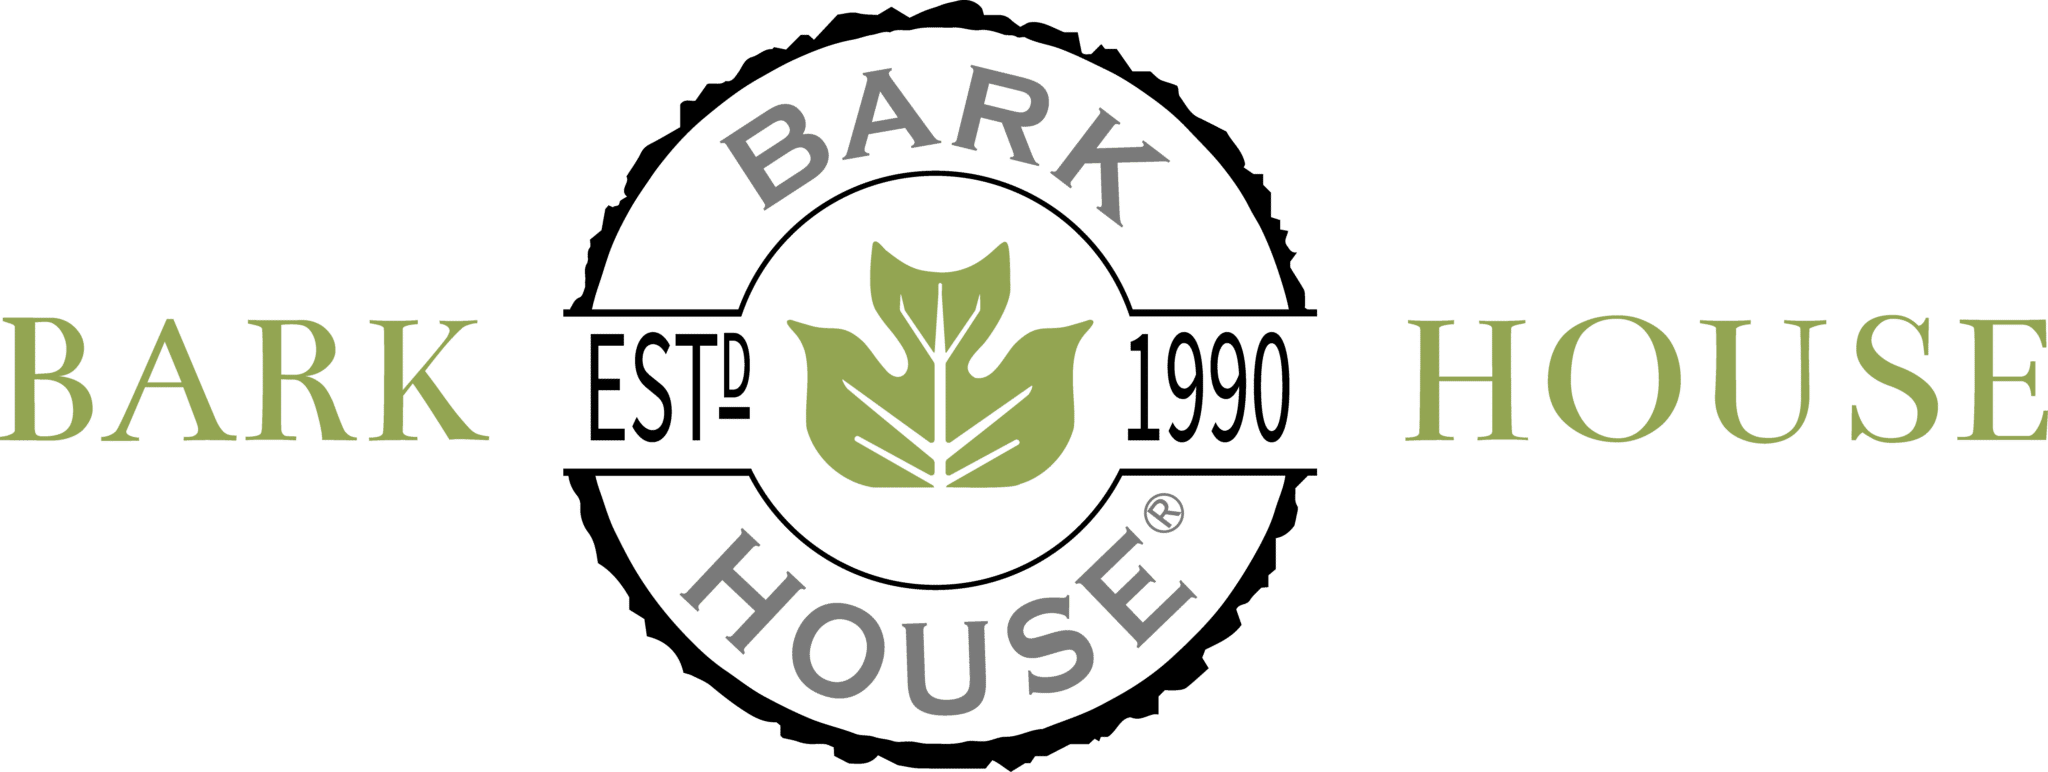 Bark House logo